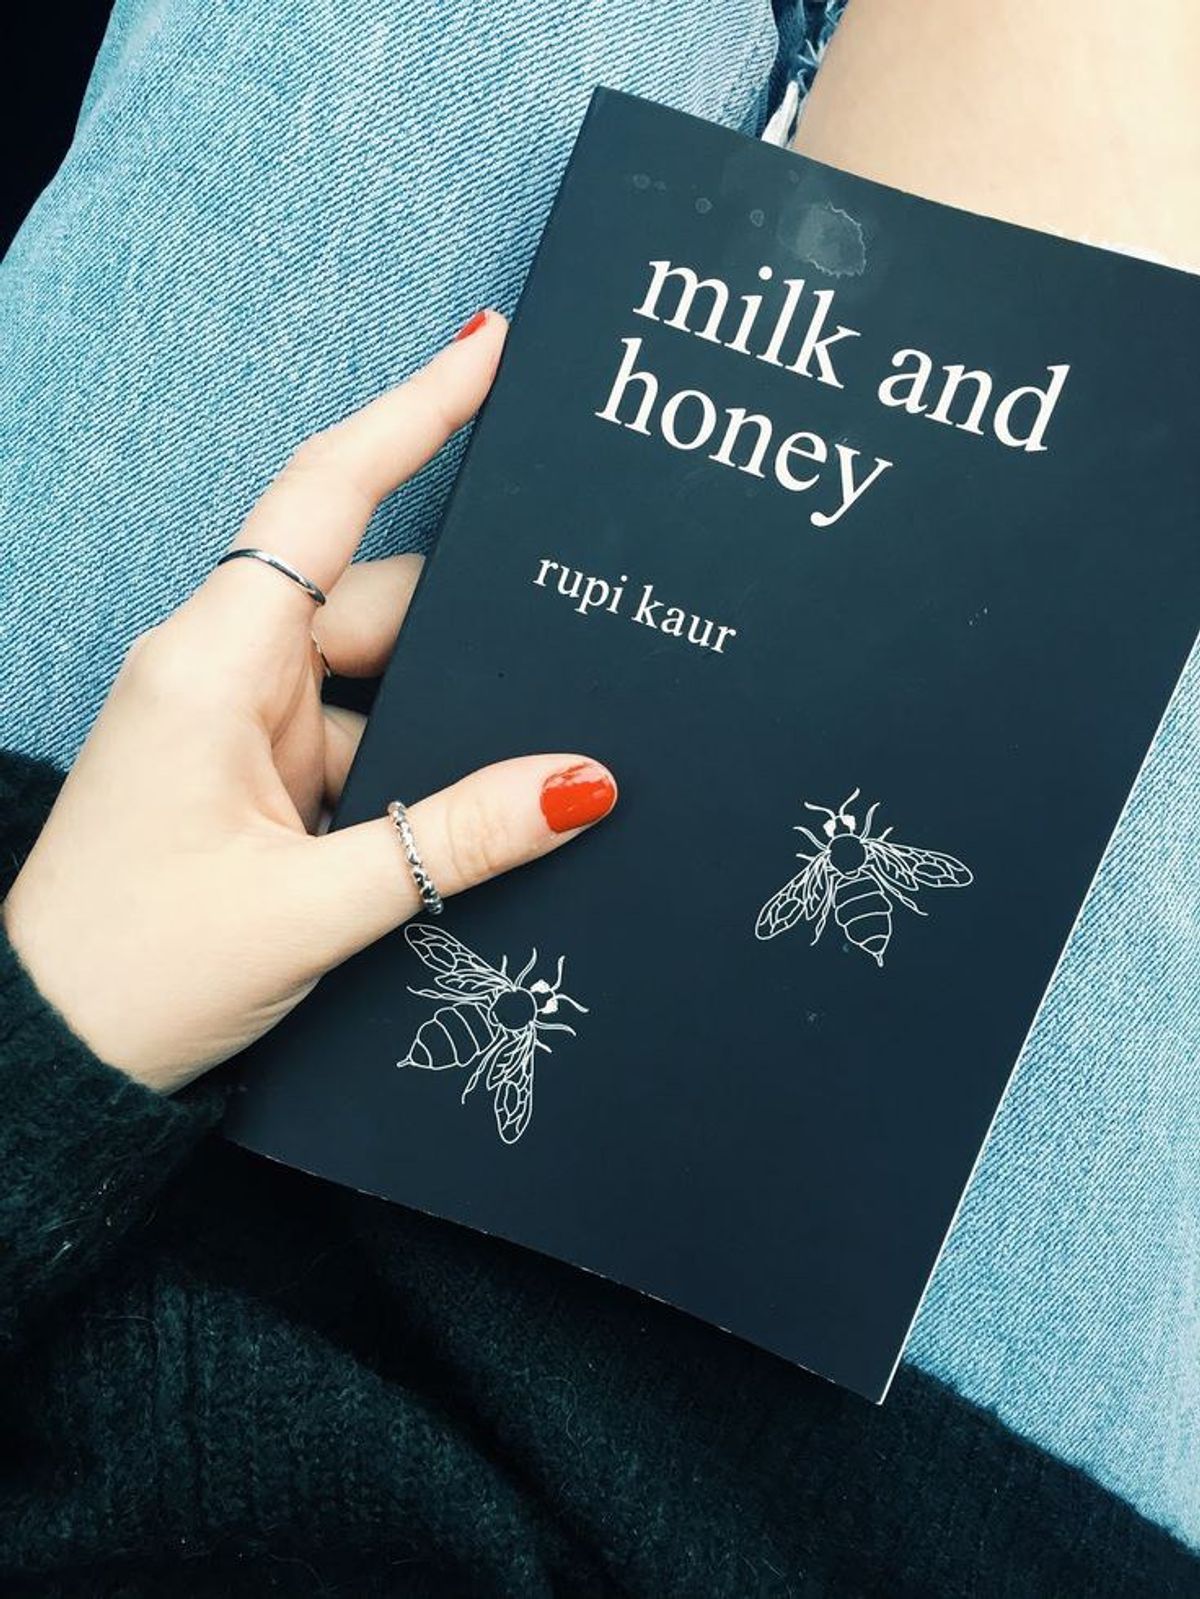 You Need To Read Rupi Kaur's "Milk and Honey"